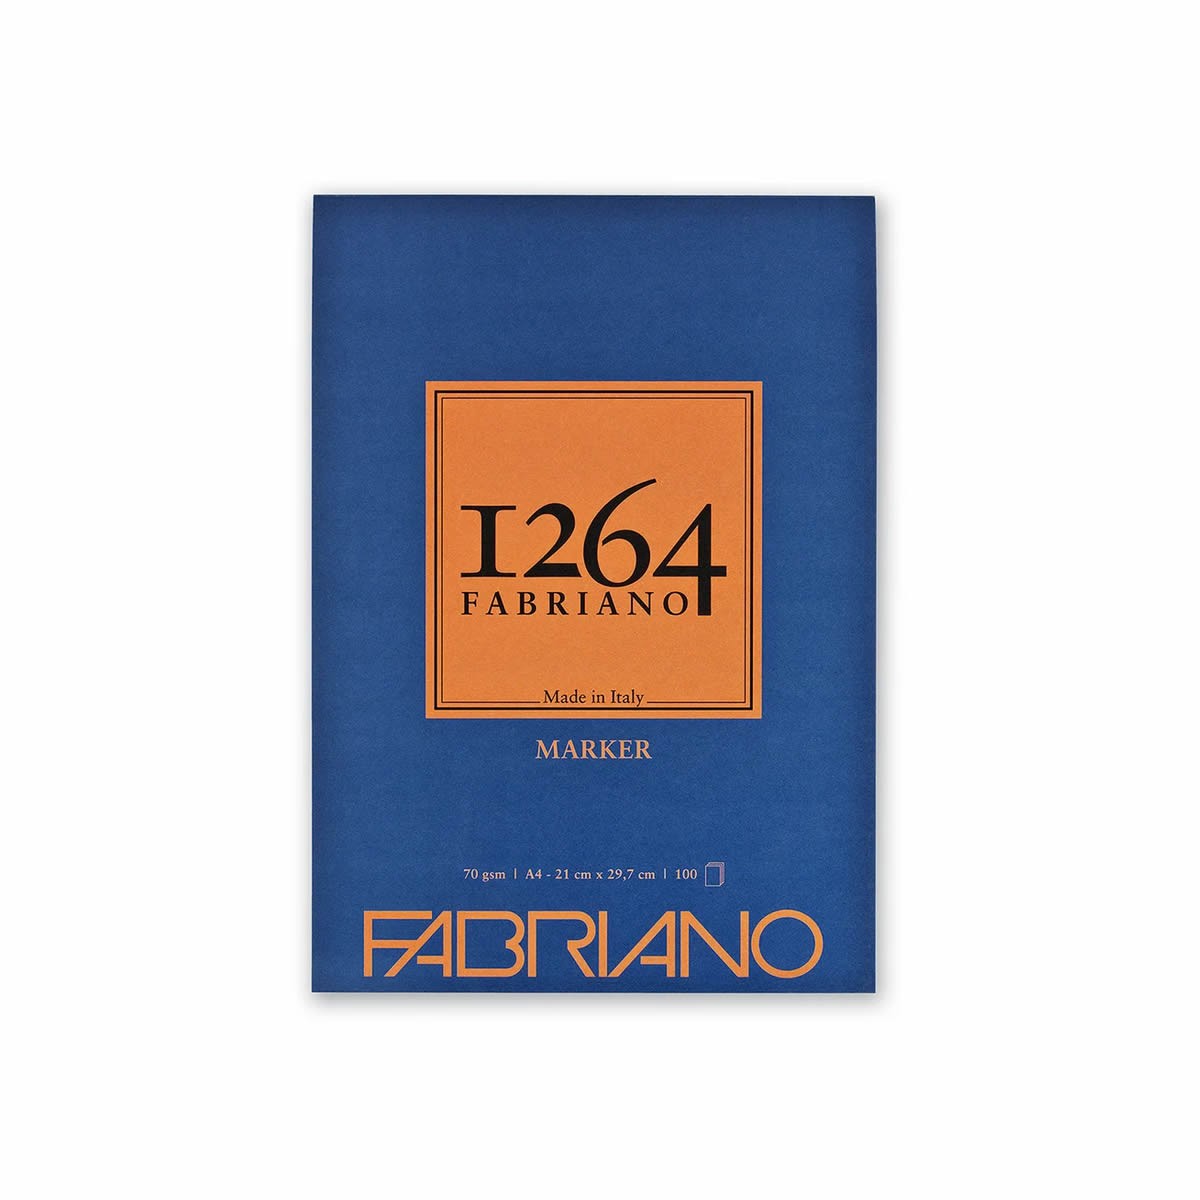 Fabriano 1264 Marker - Μπλοκ Μαρκαδόρου Α4